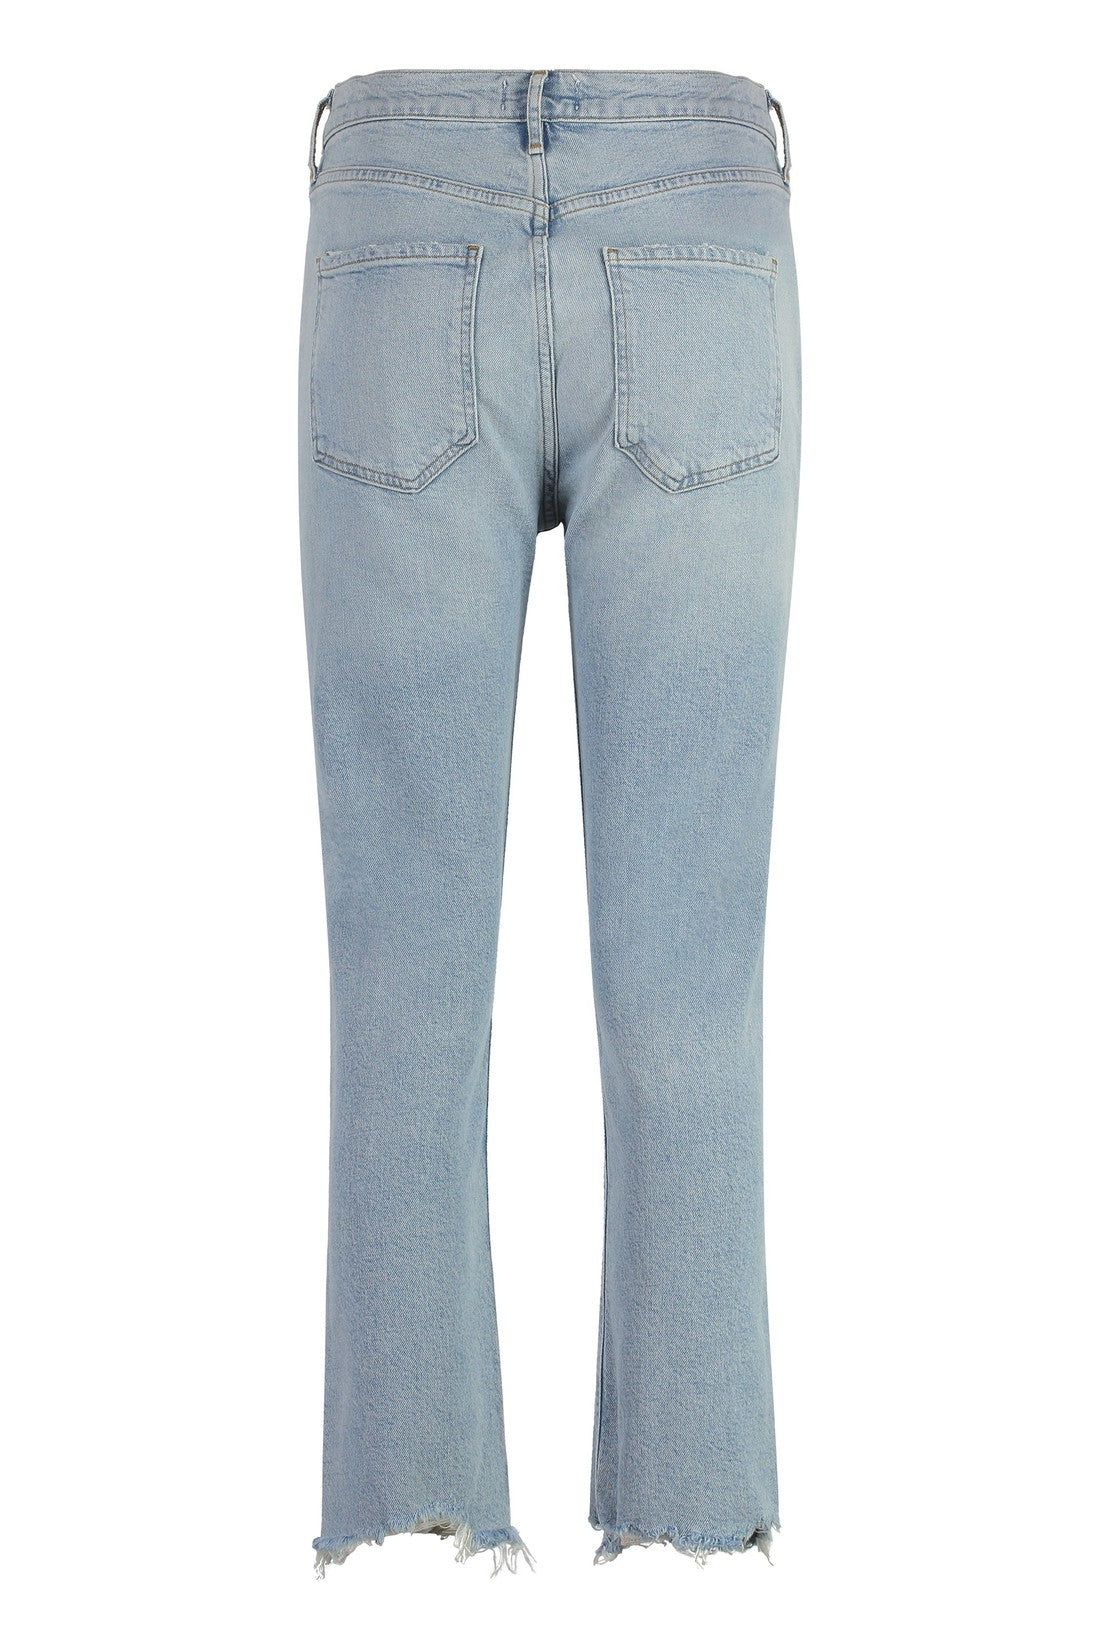 AGOLDE-OUTLET-SALE-Riley Straight leg jeans-ARCHIVIST